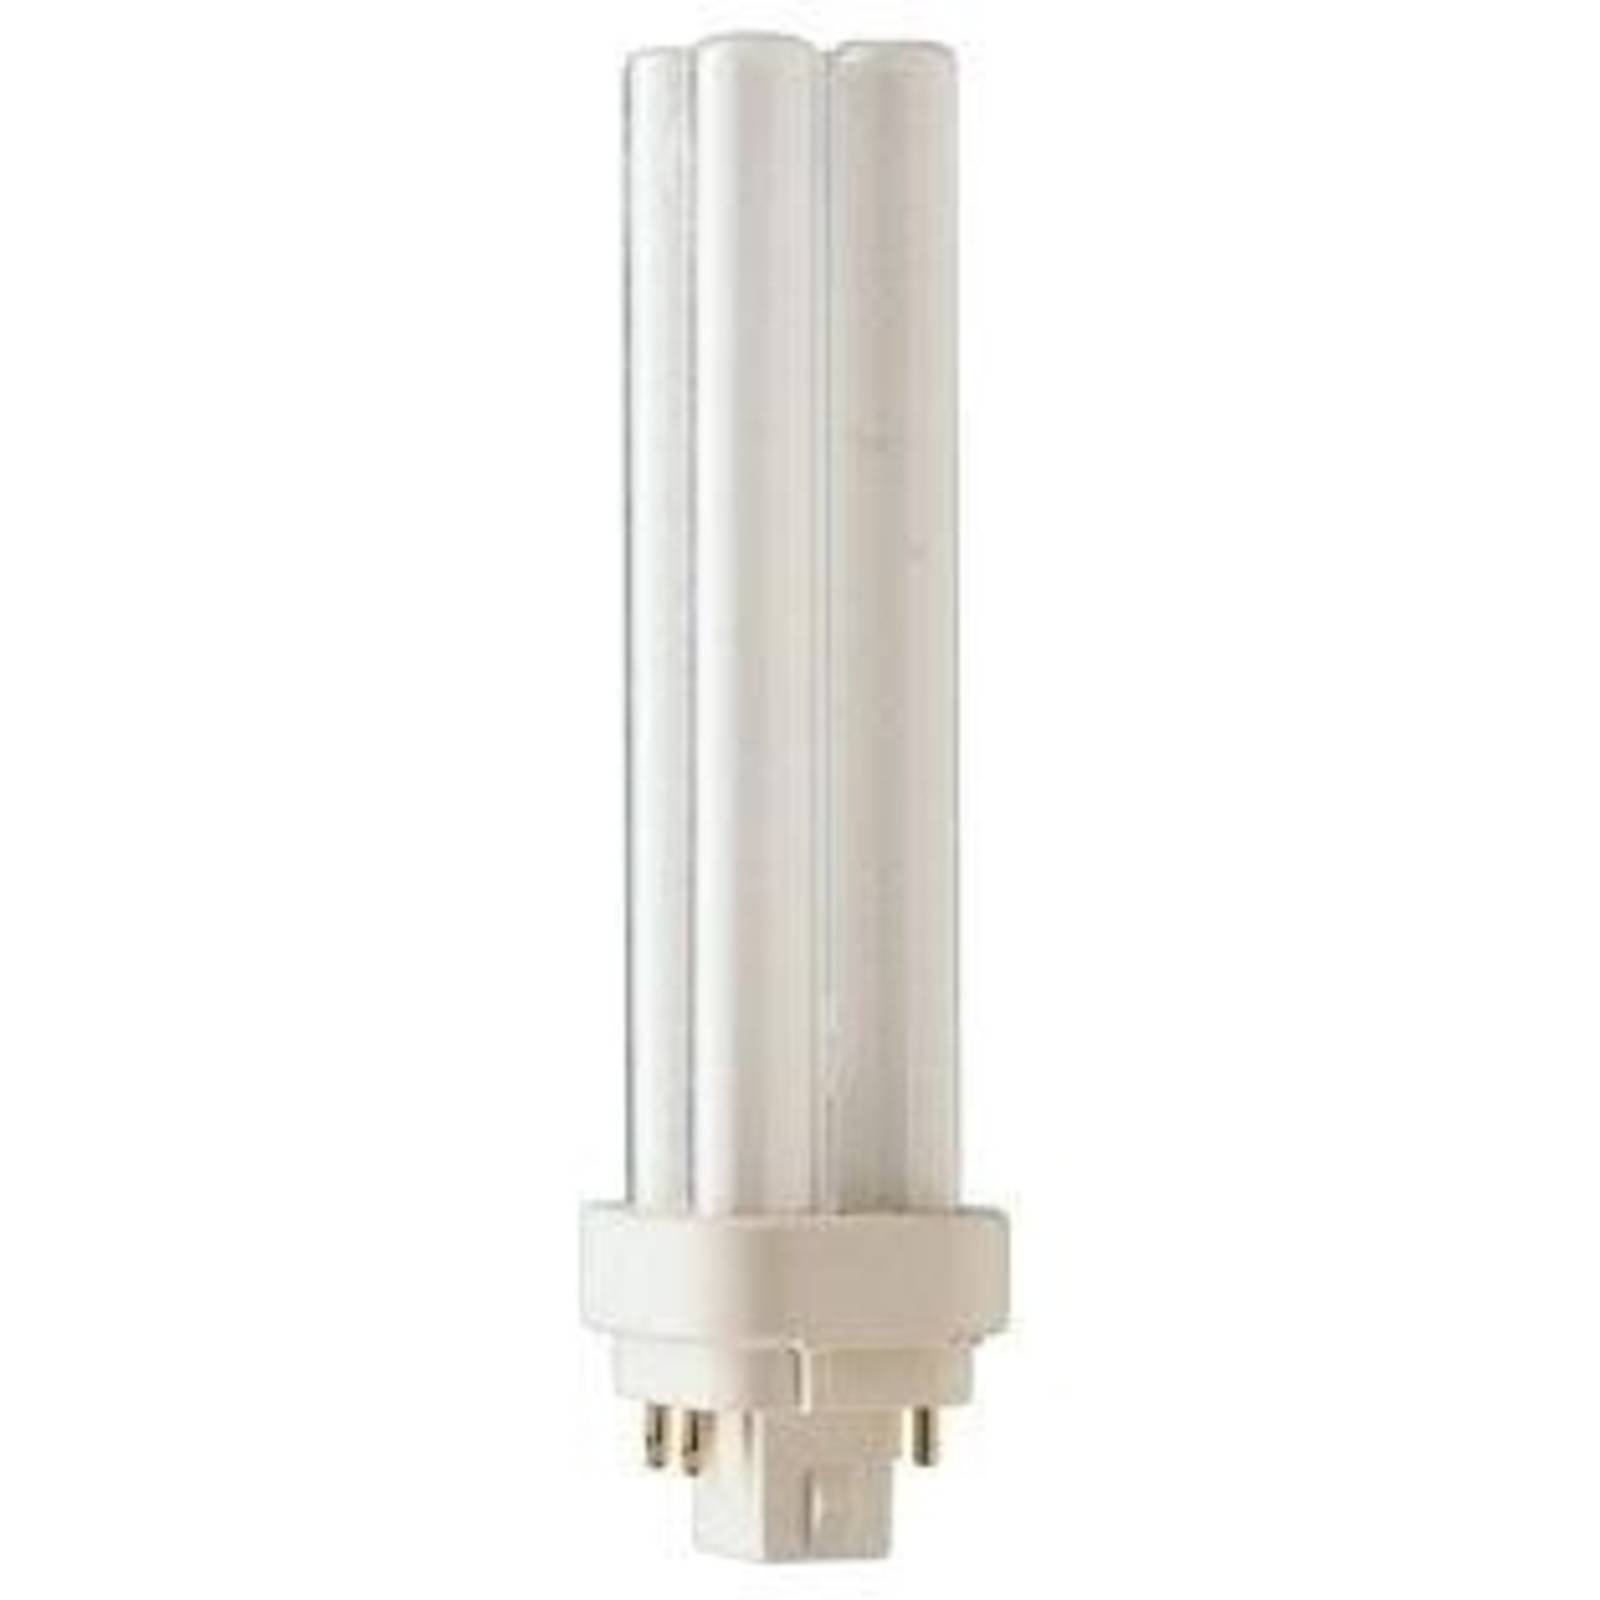 G24q compact fluorescent bulb Master PL-C 4Pin 26W